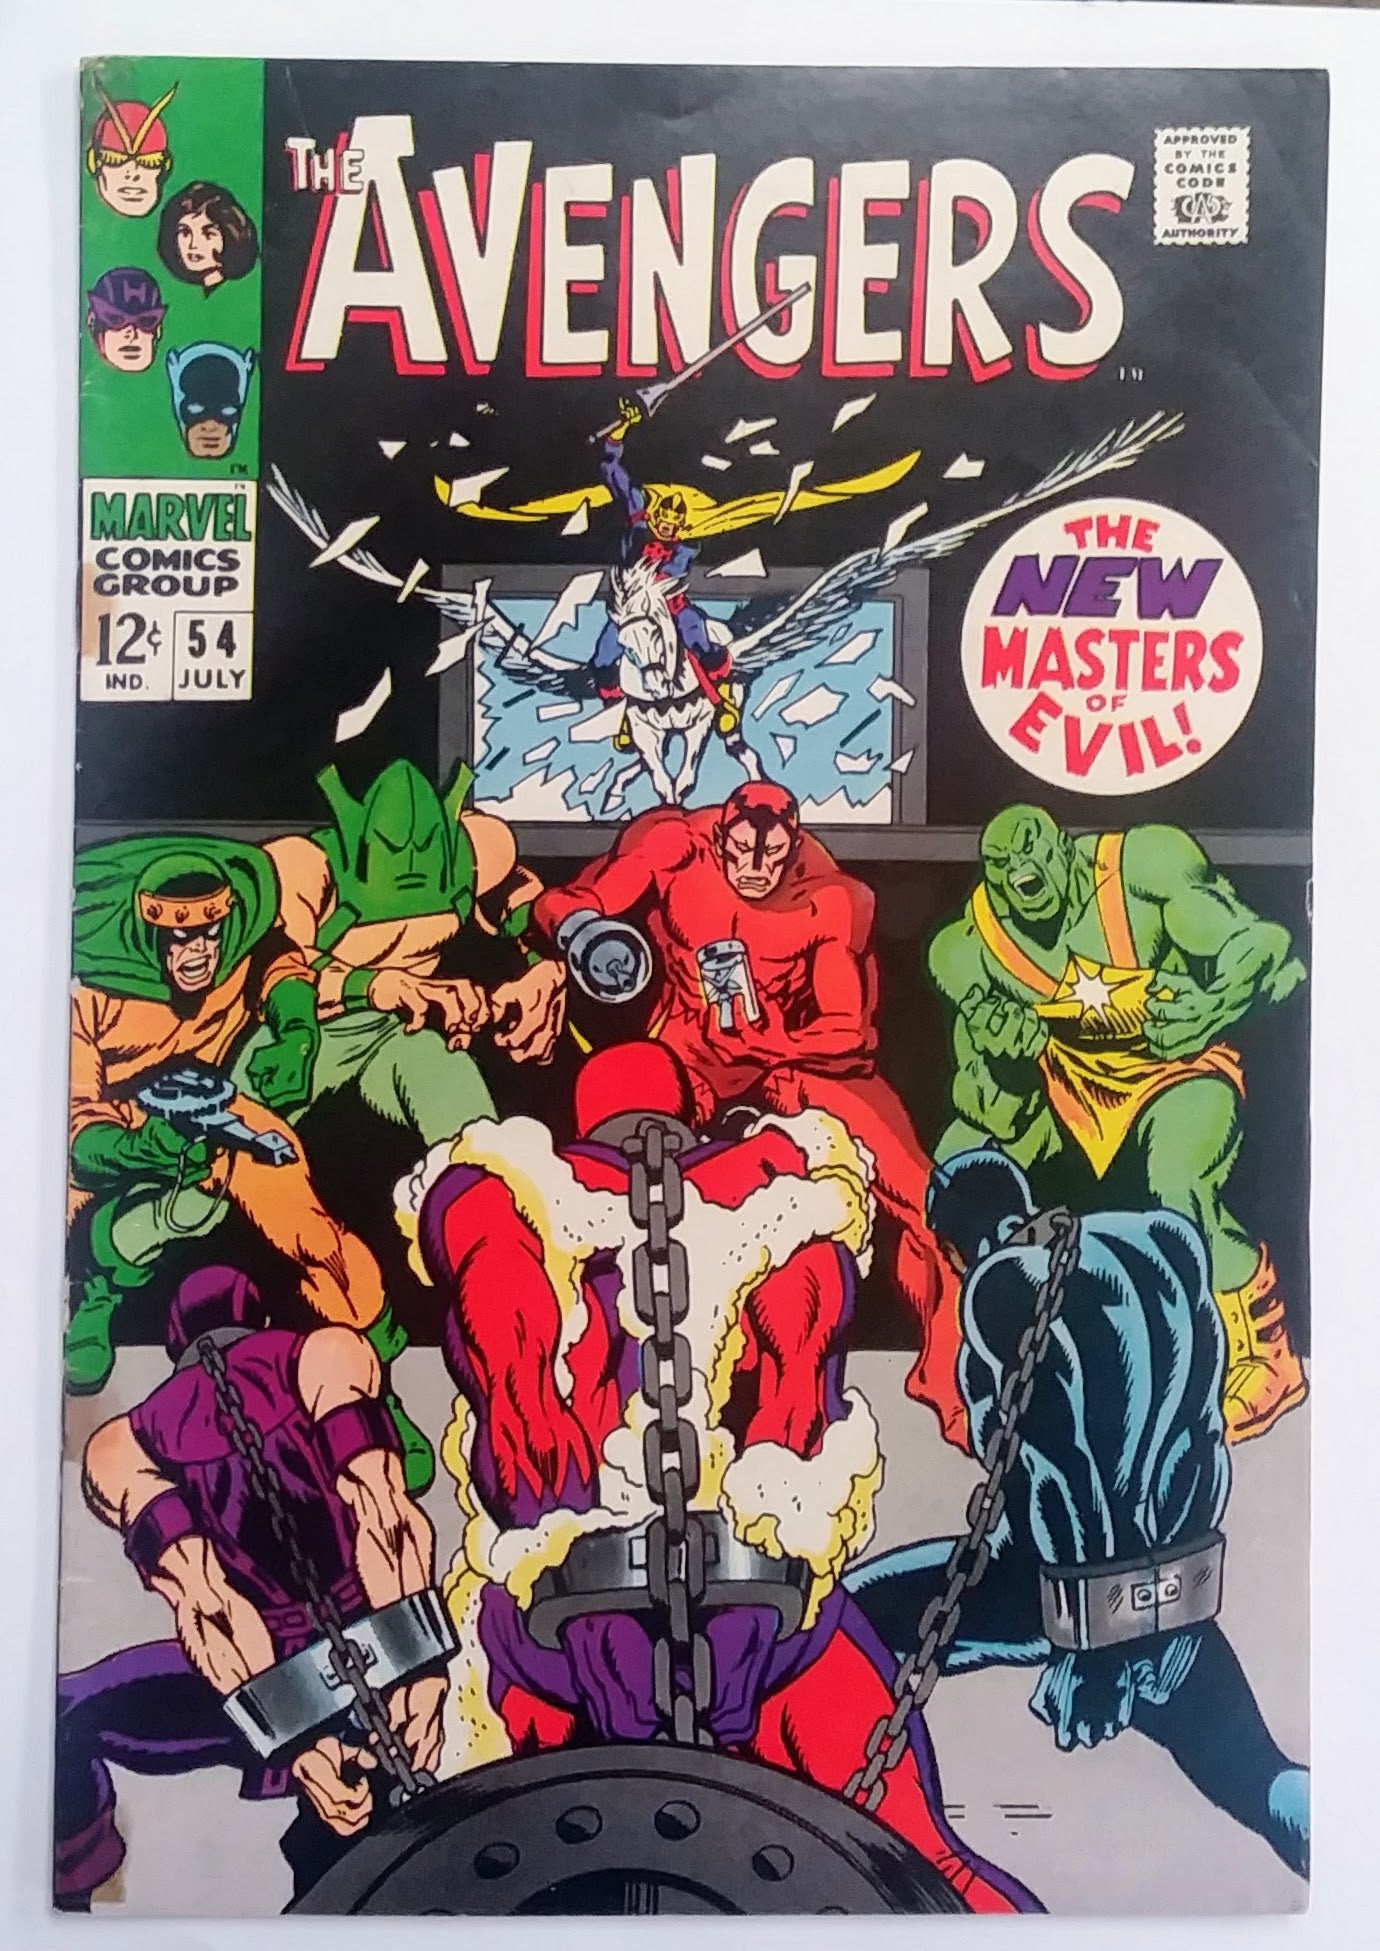 Avengers #054, Marvel Comics (July 1968)